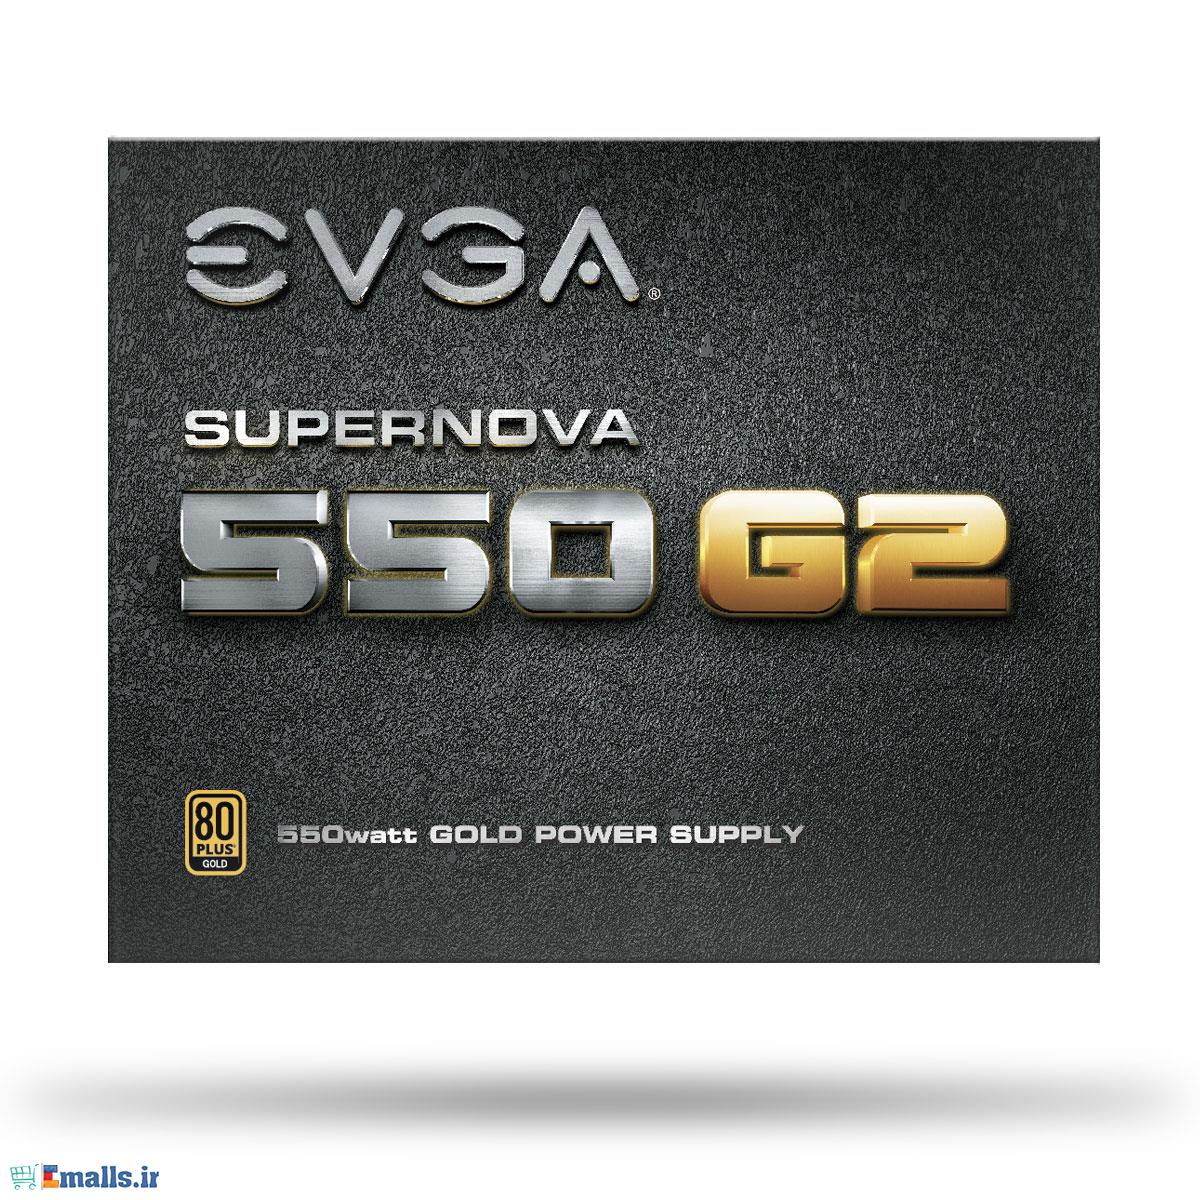 EVGA SuperNOVA 550 G2 80Plus Gold Power Supply